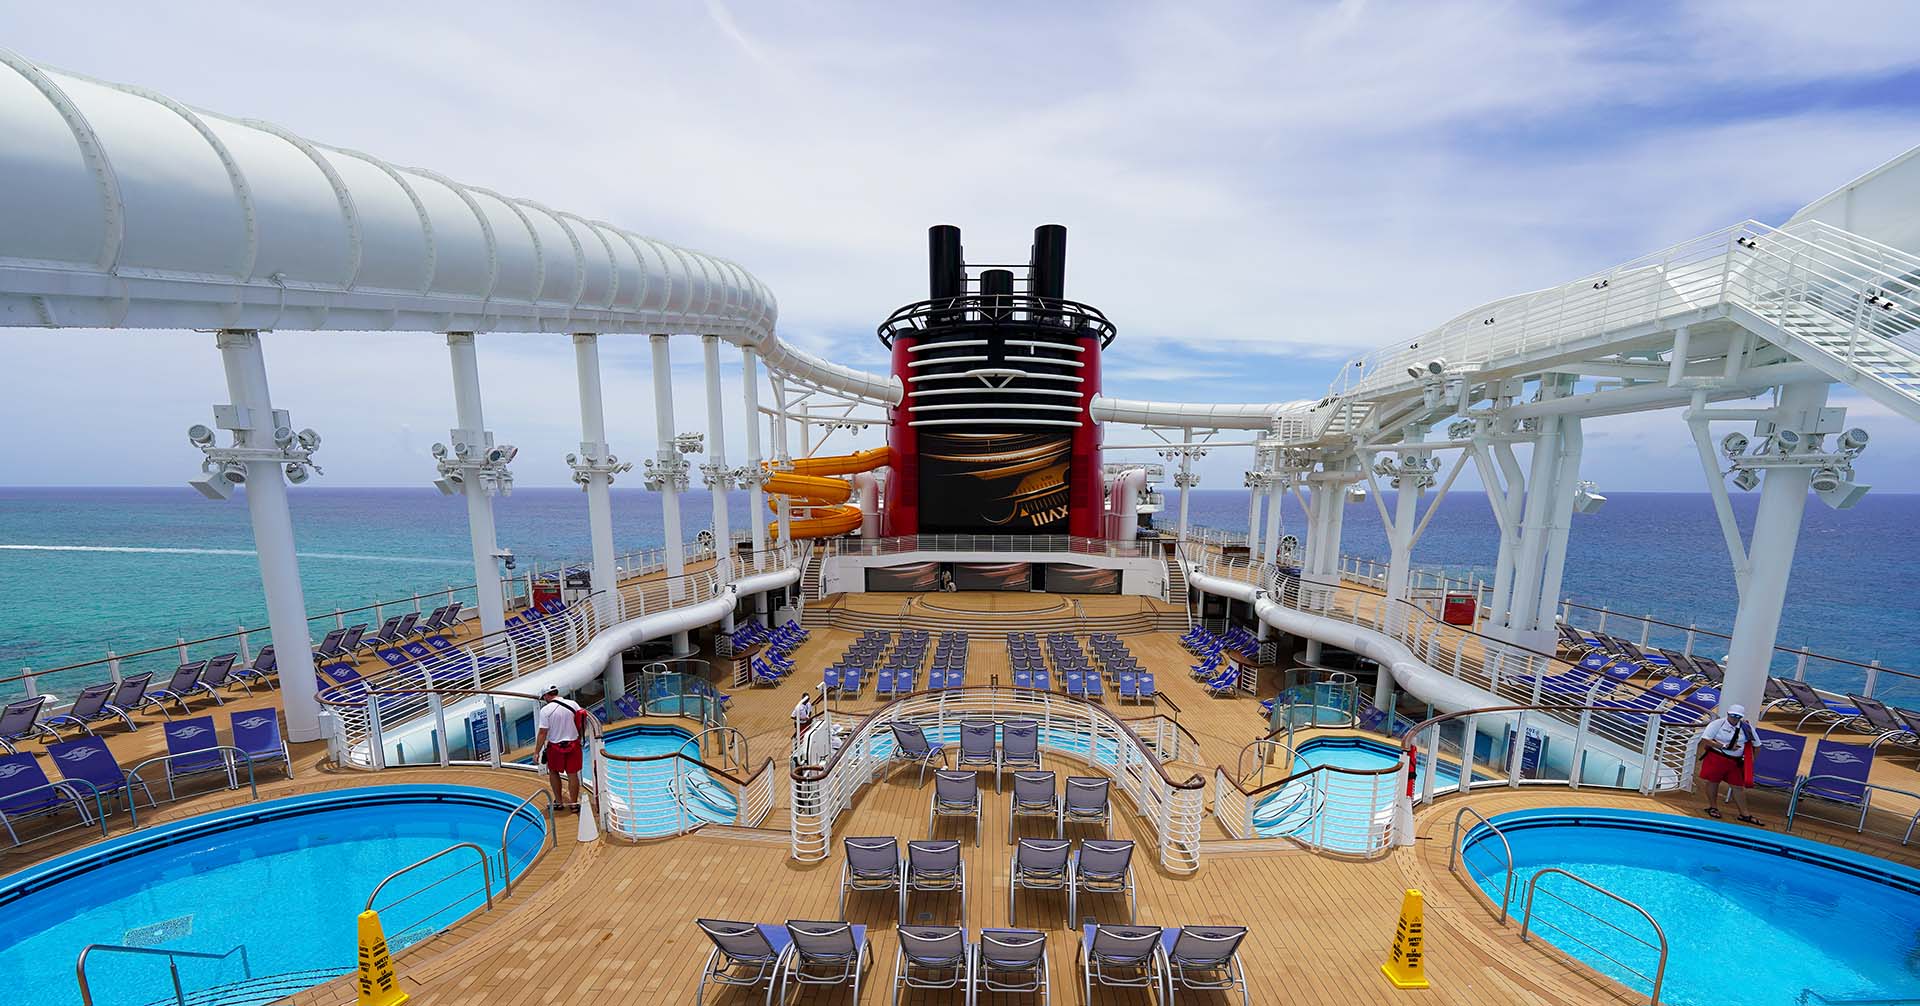 Disney Cruise Wish Deck and Pools